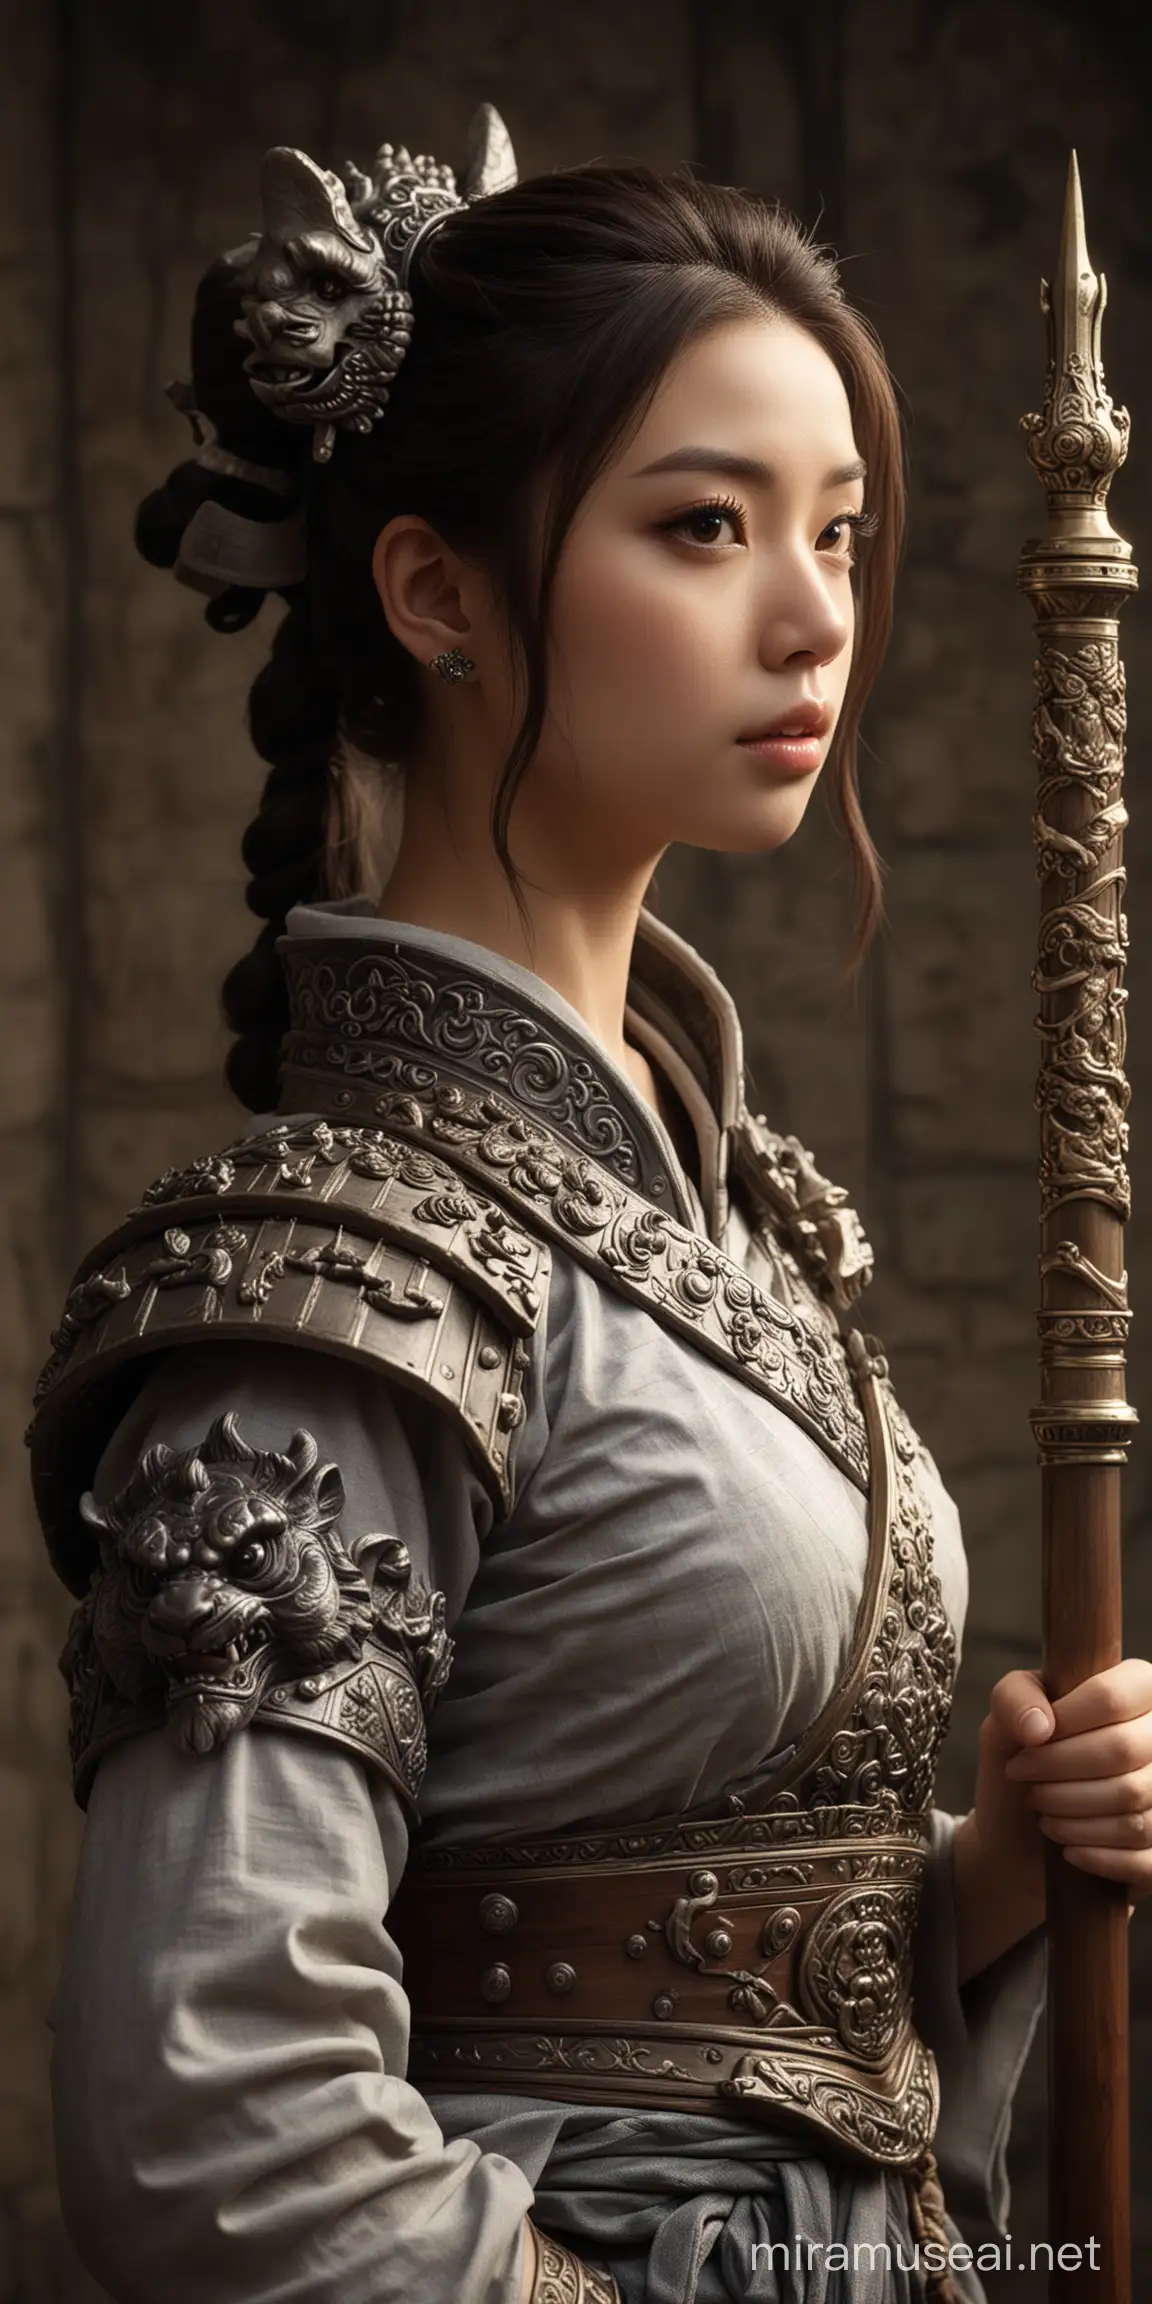 Beautiful Idol Girl with Komainu Pikeman in Realistic Castle Studio Portrait